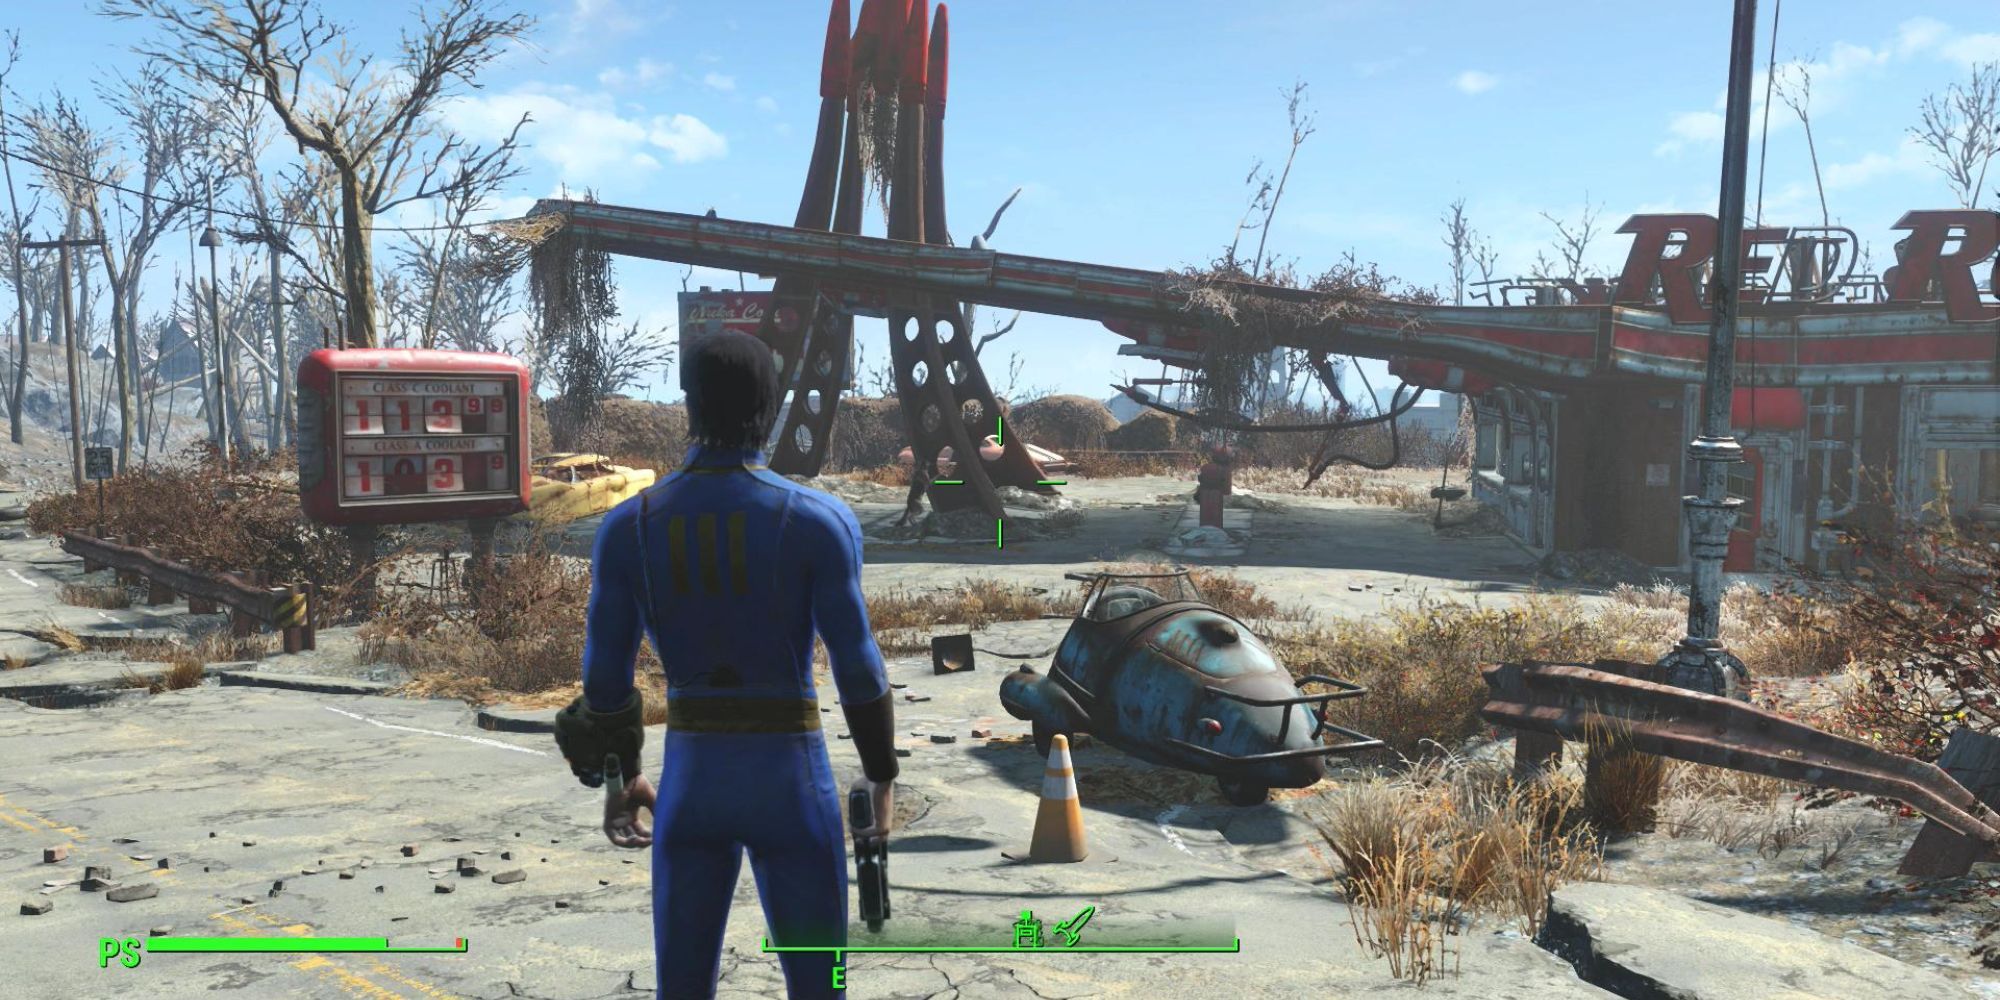 Руководство для начинающих по модификации Fallout 4 на PlayStation